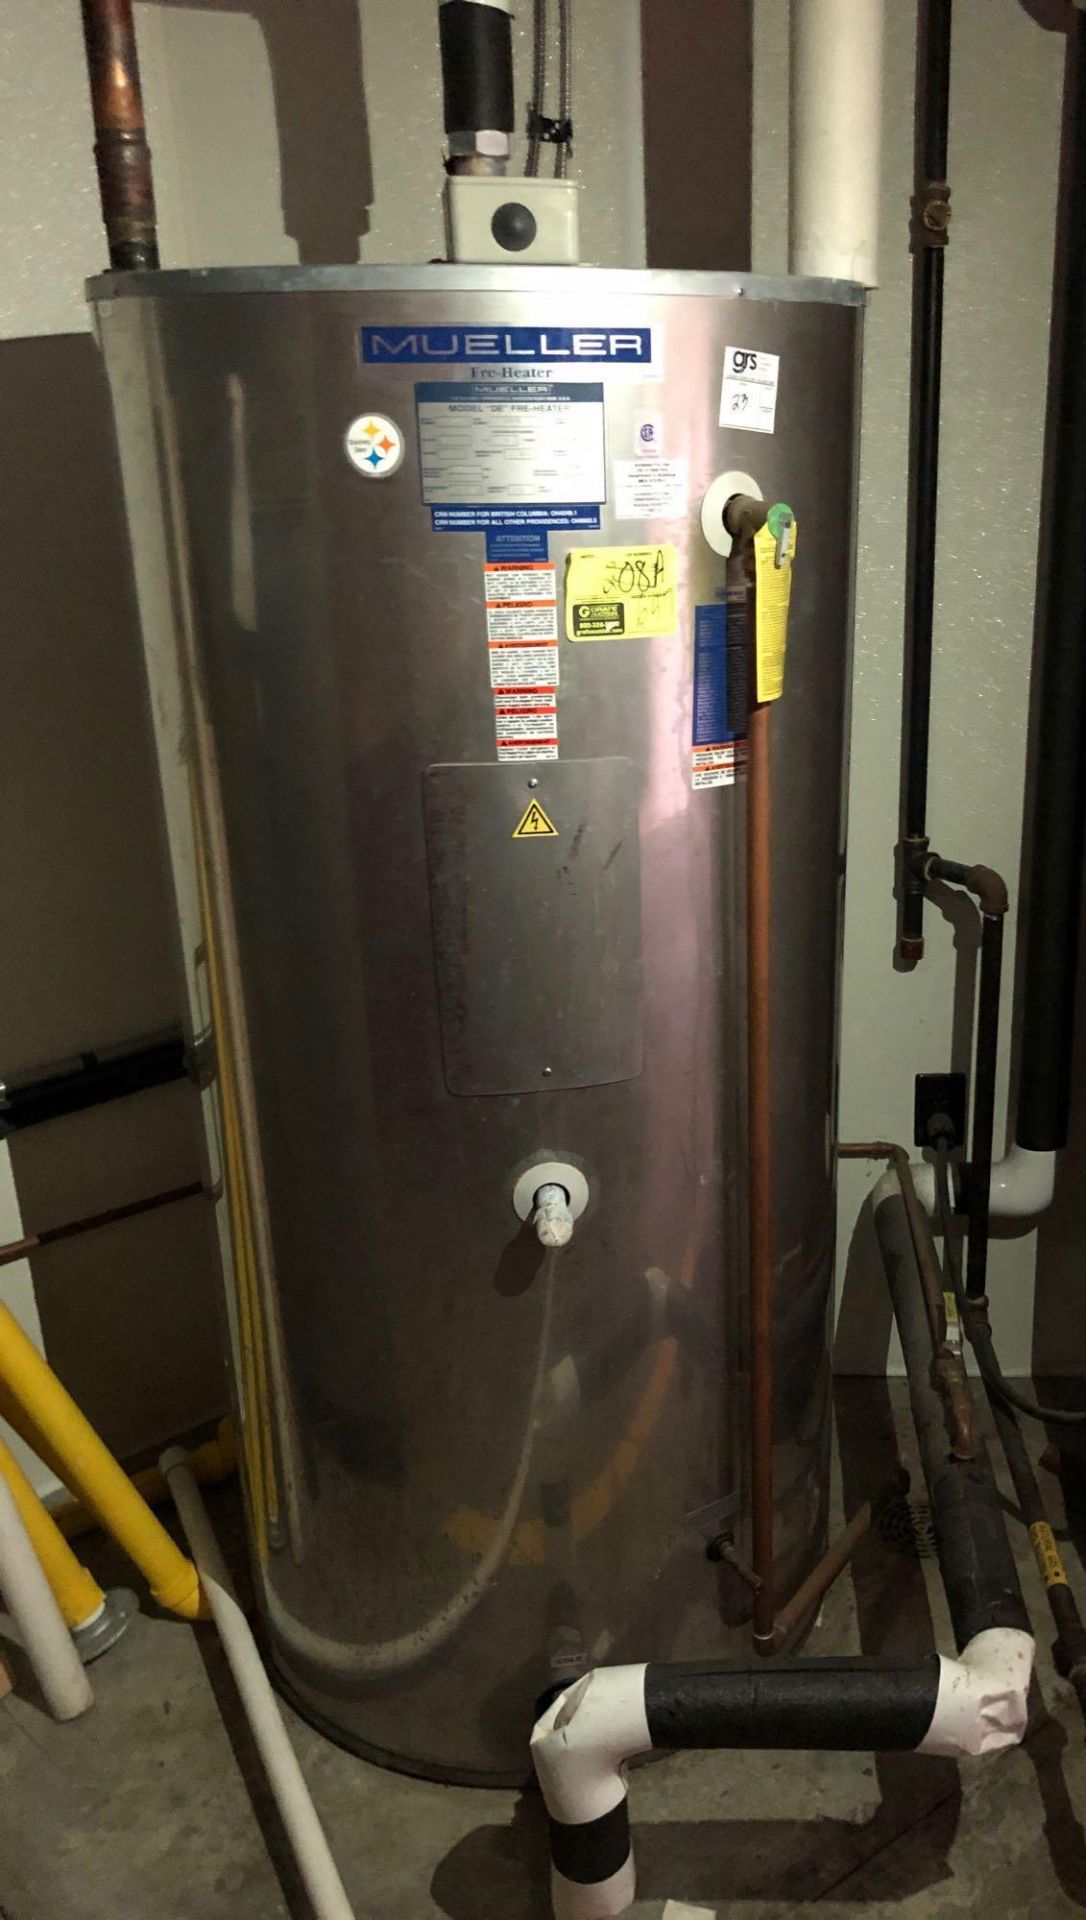 Mueller Fre Heater - Milk Cooling System